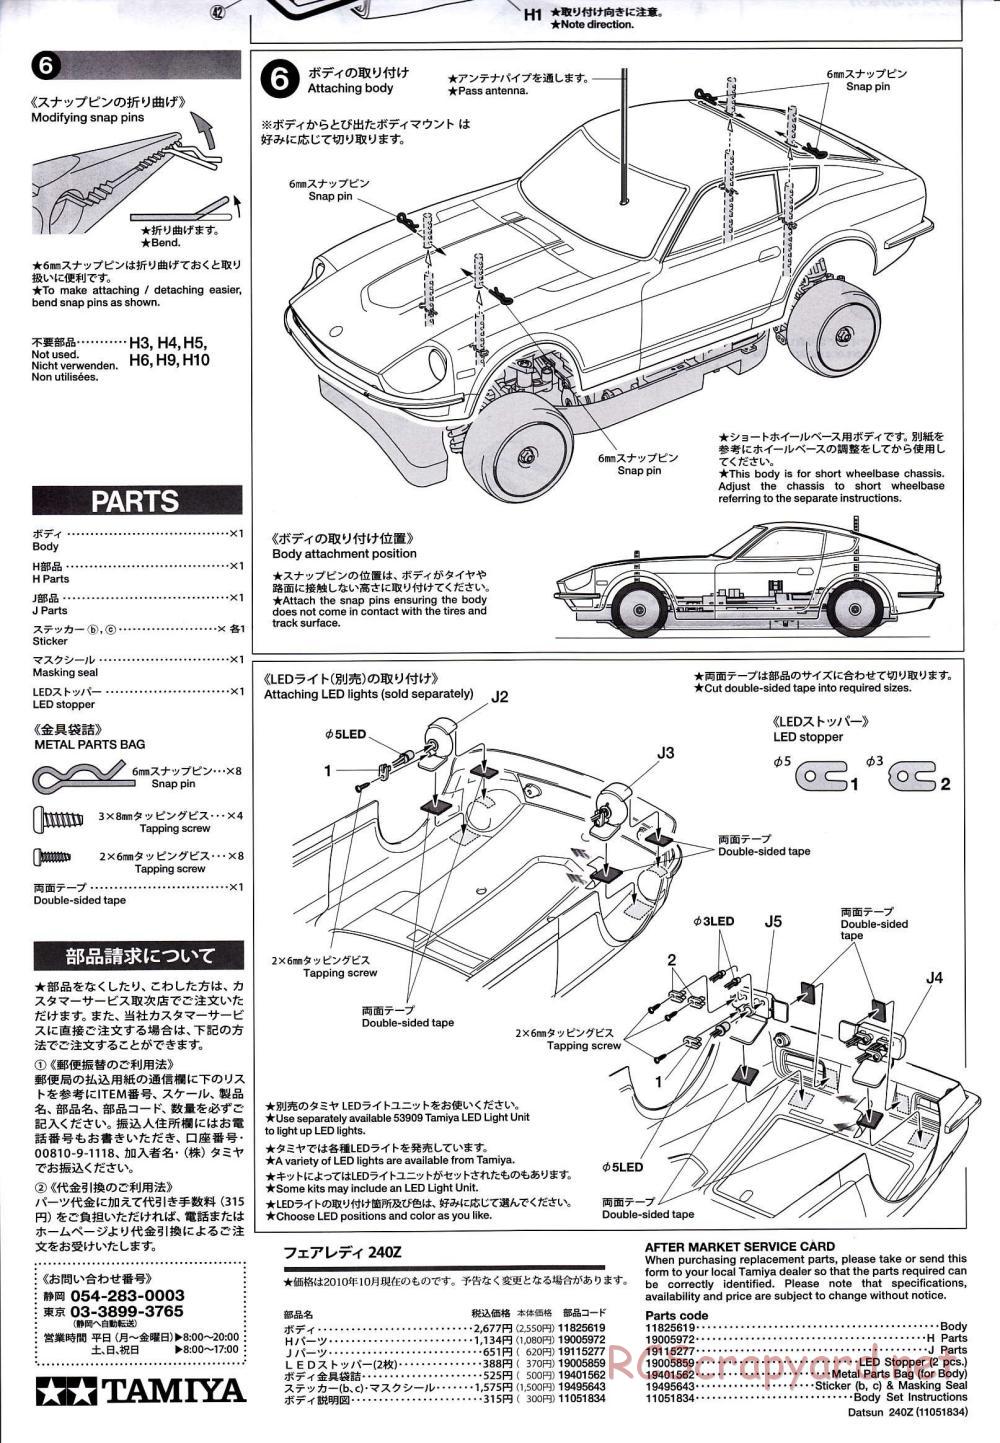 Tamiya - Datsun 240Z - Drift Spec - TT-01ED Chassis - Body Manual - Page 4